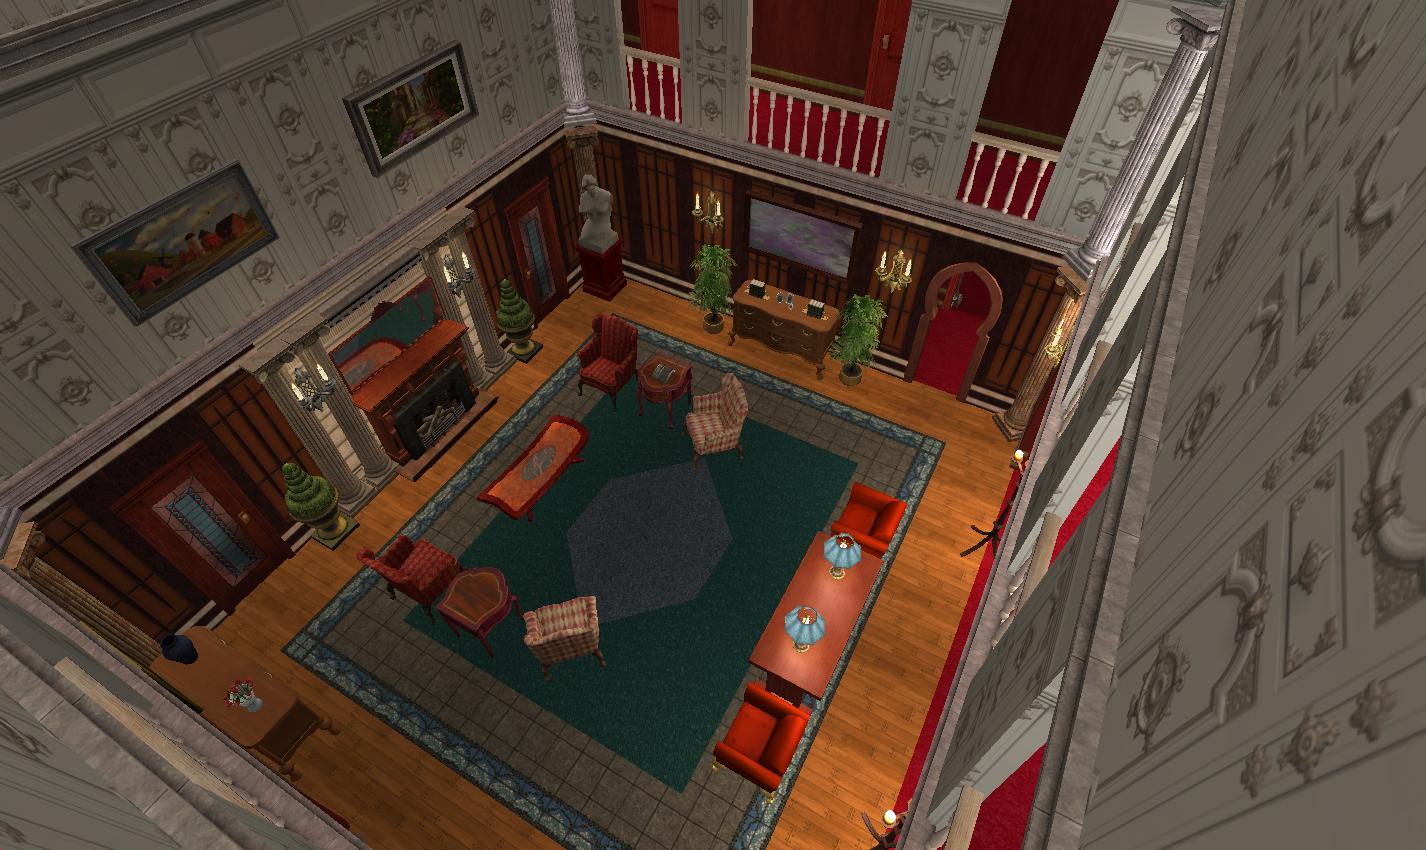 Mod The Sims Downton Abbey Highclere Castle No Cc